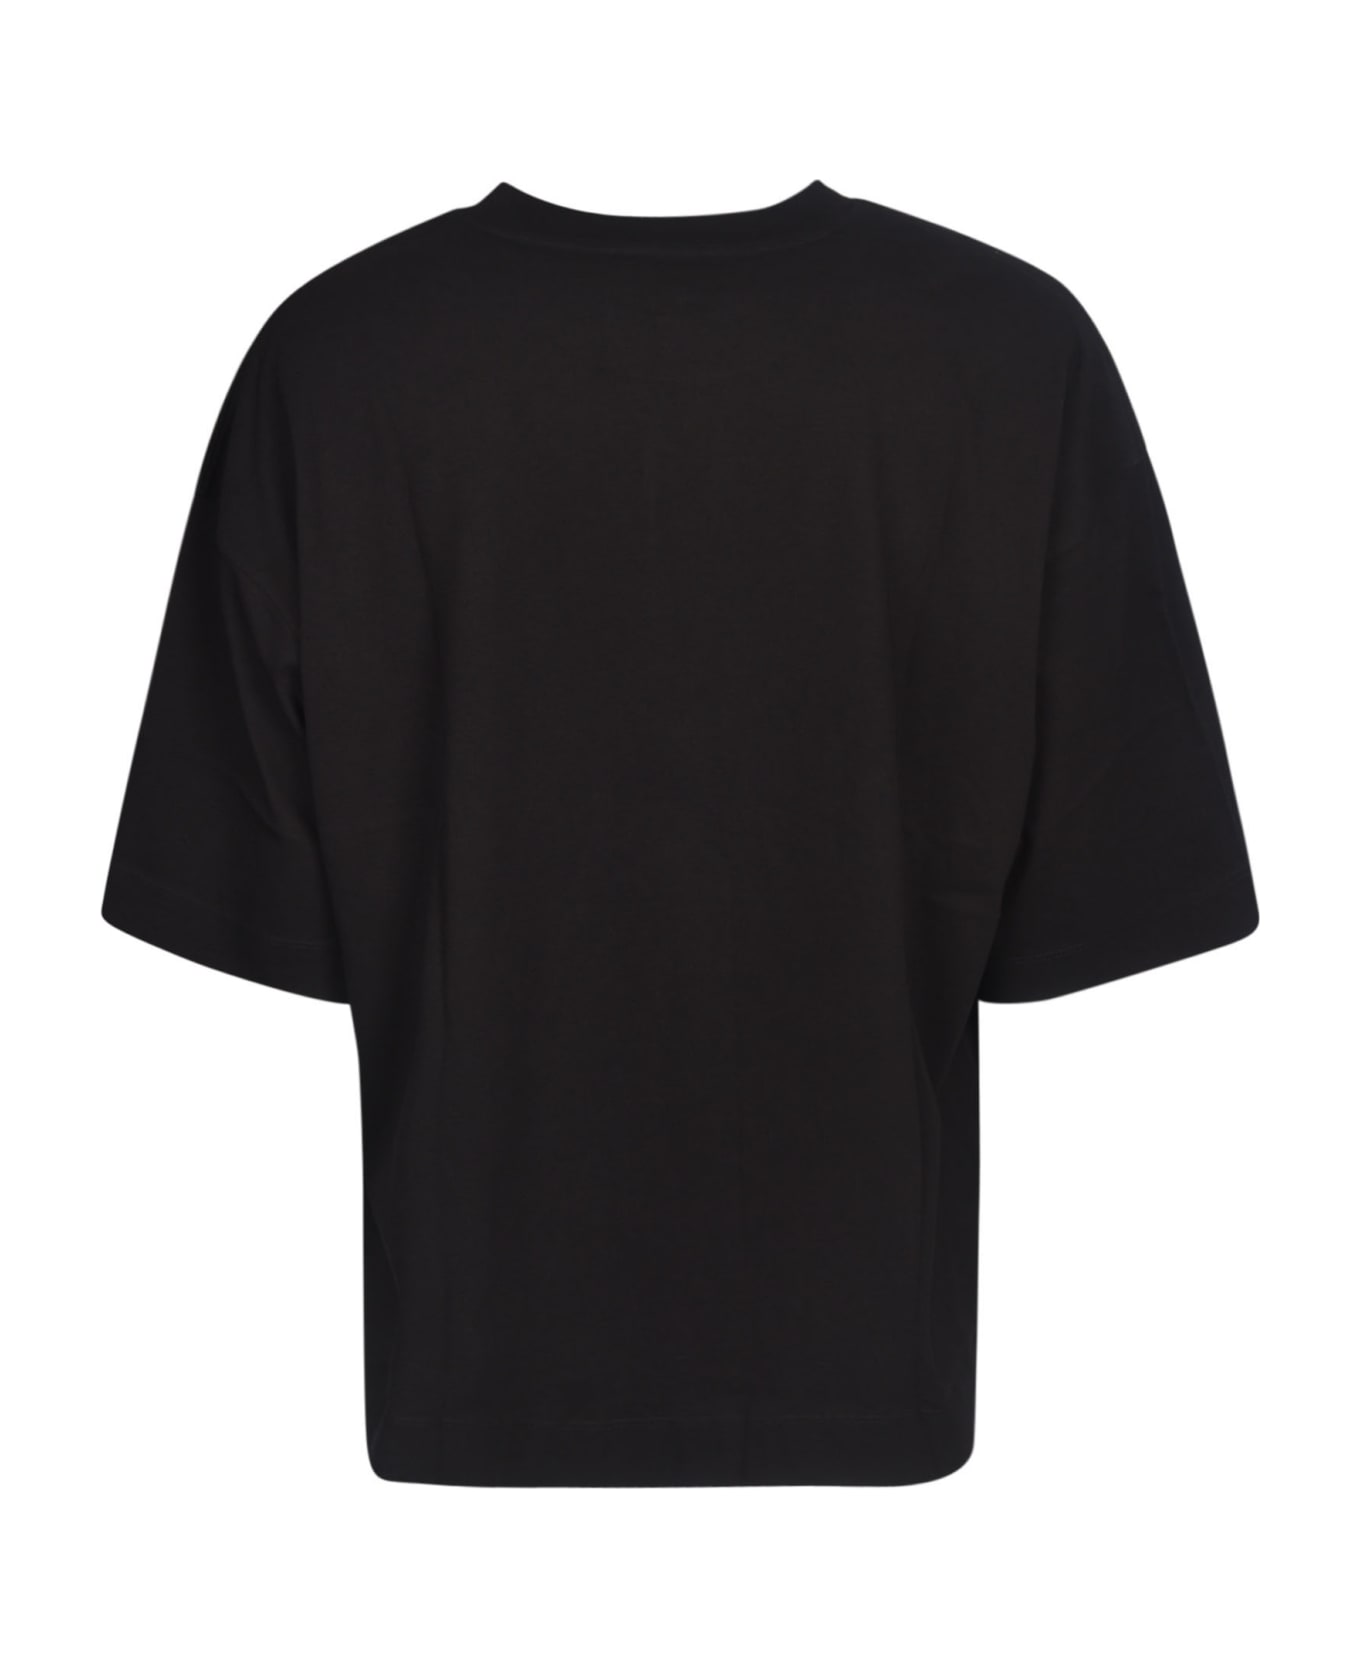 Dries Van Noten M.k.t. T-shirt - Black